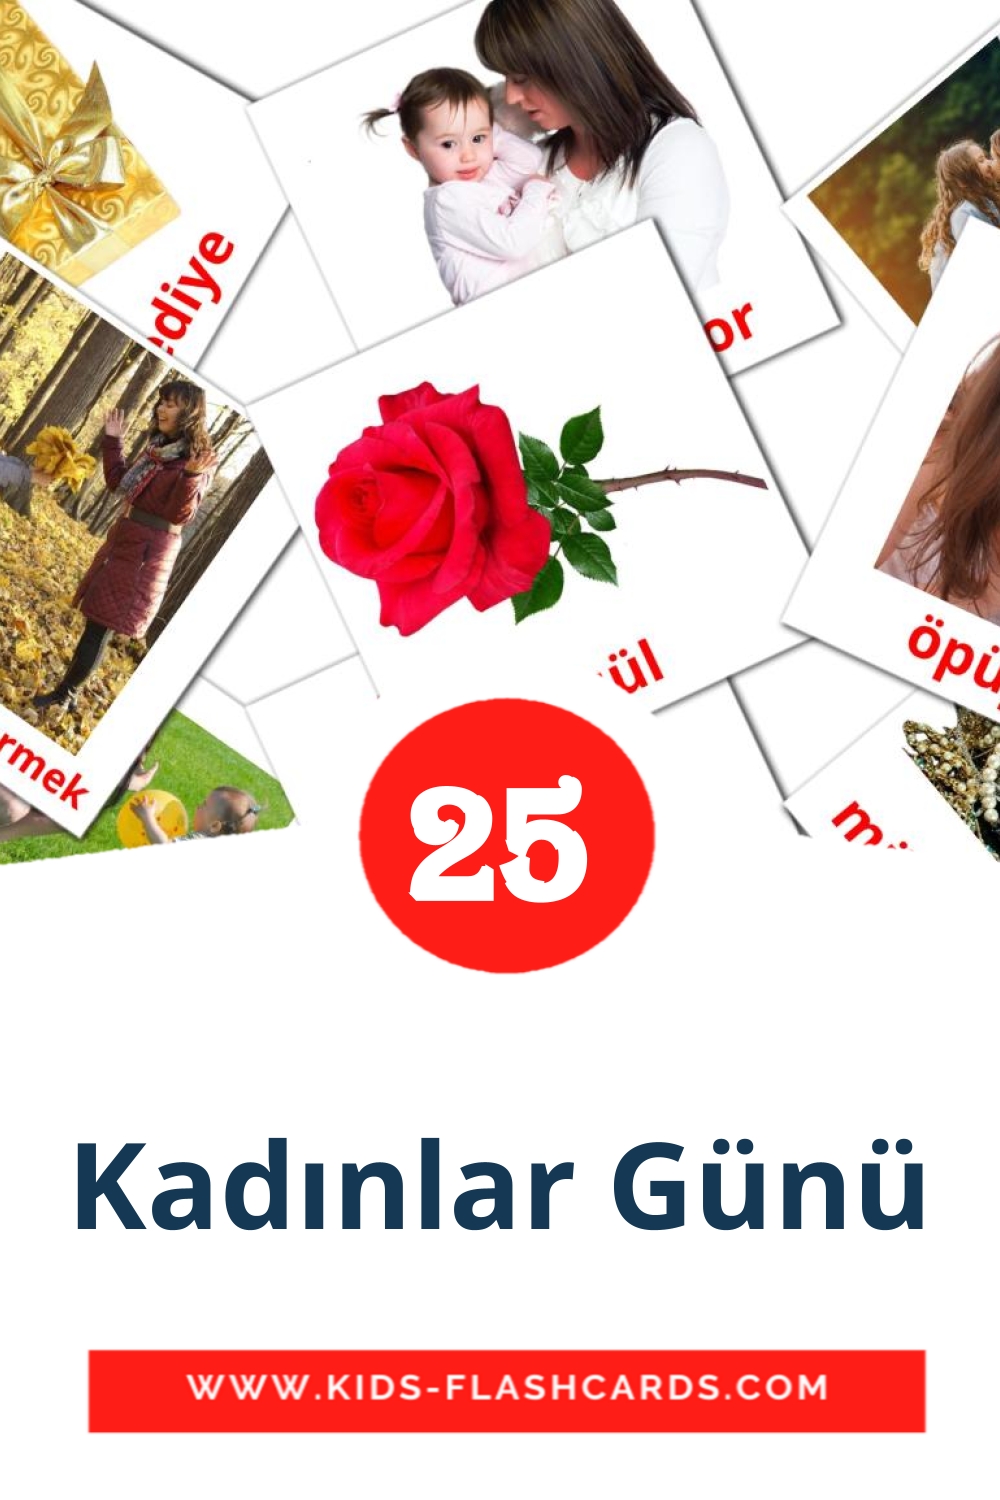 25 Cartões com Imagens de Kadınlar Günü para Jardim de Infância em turco